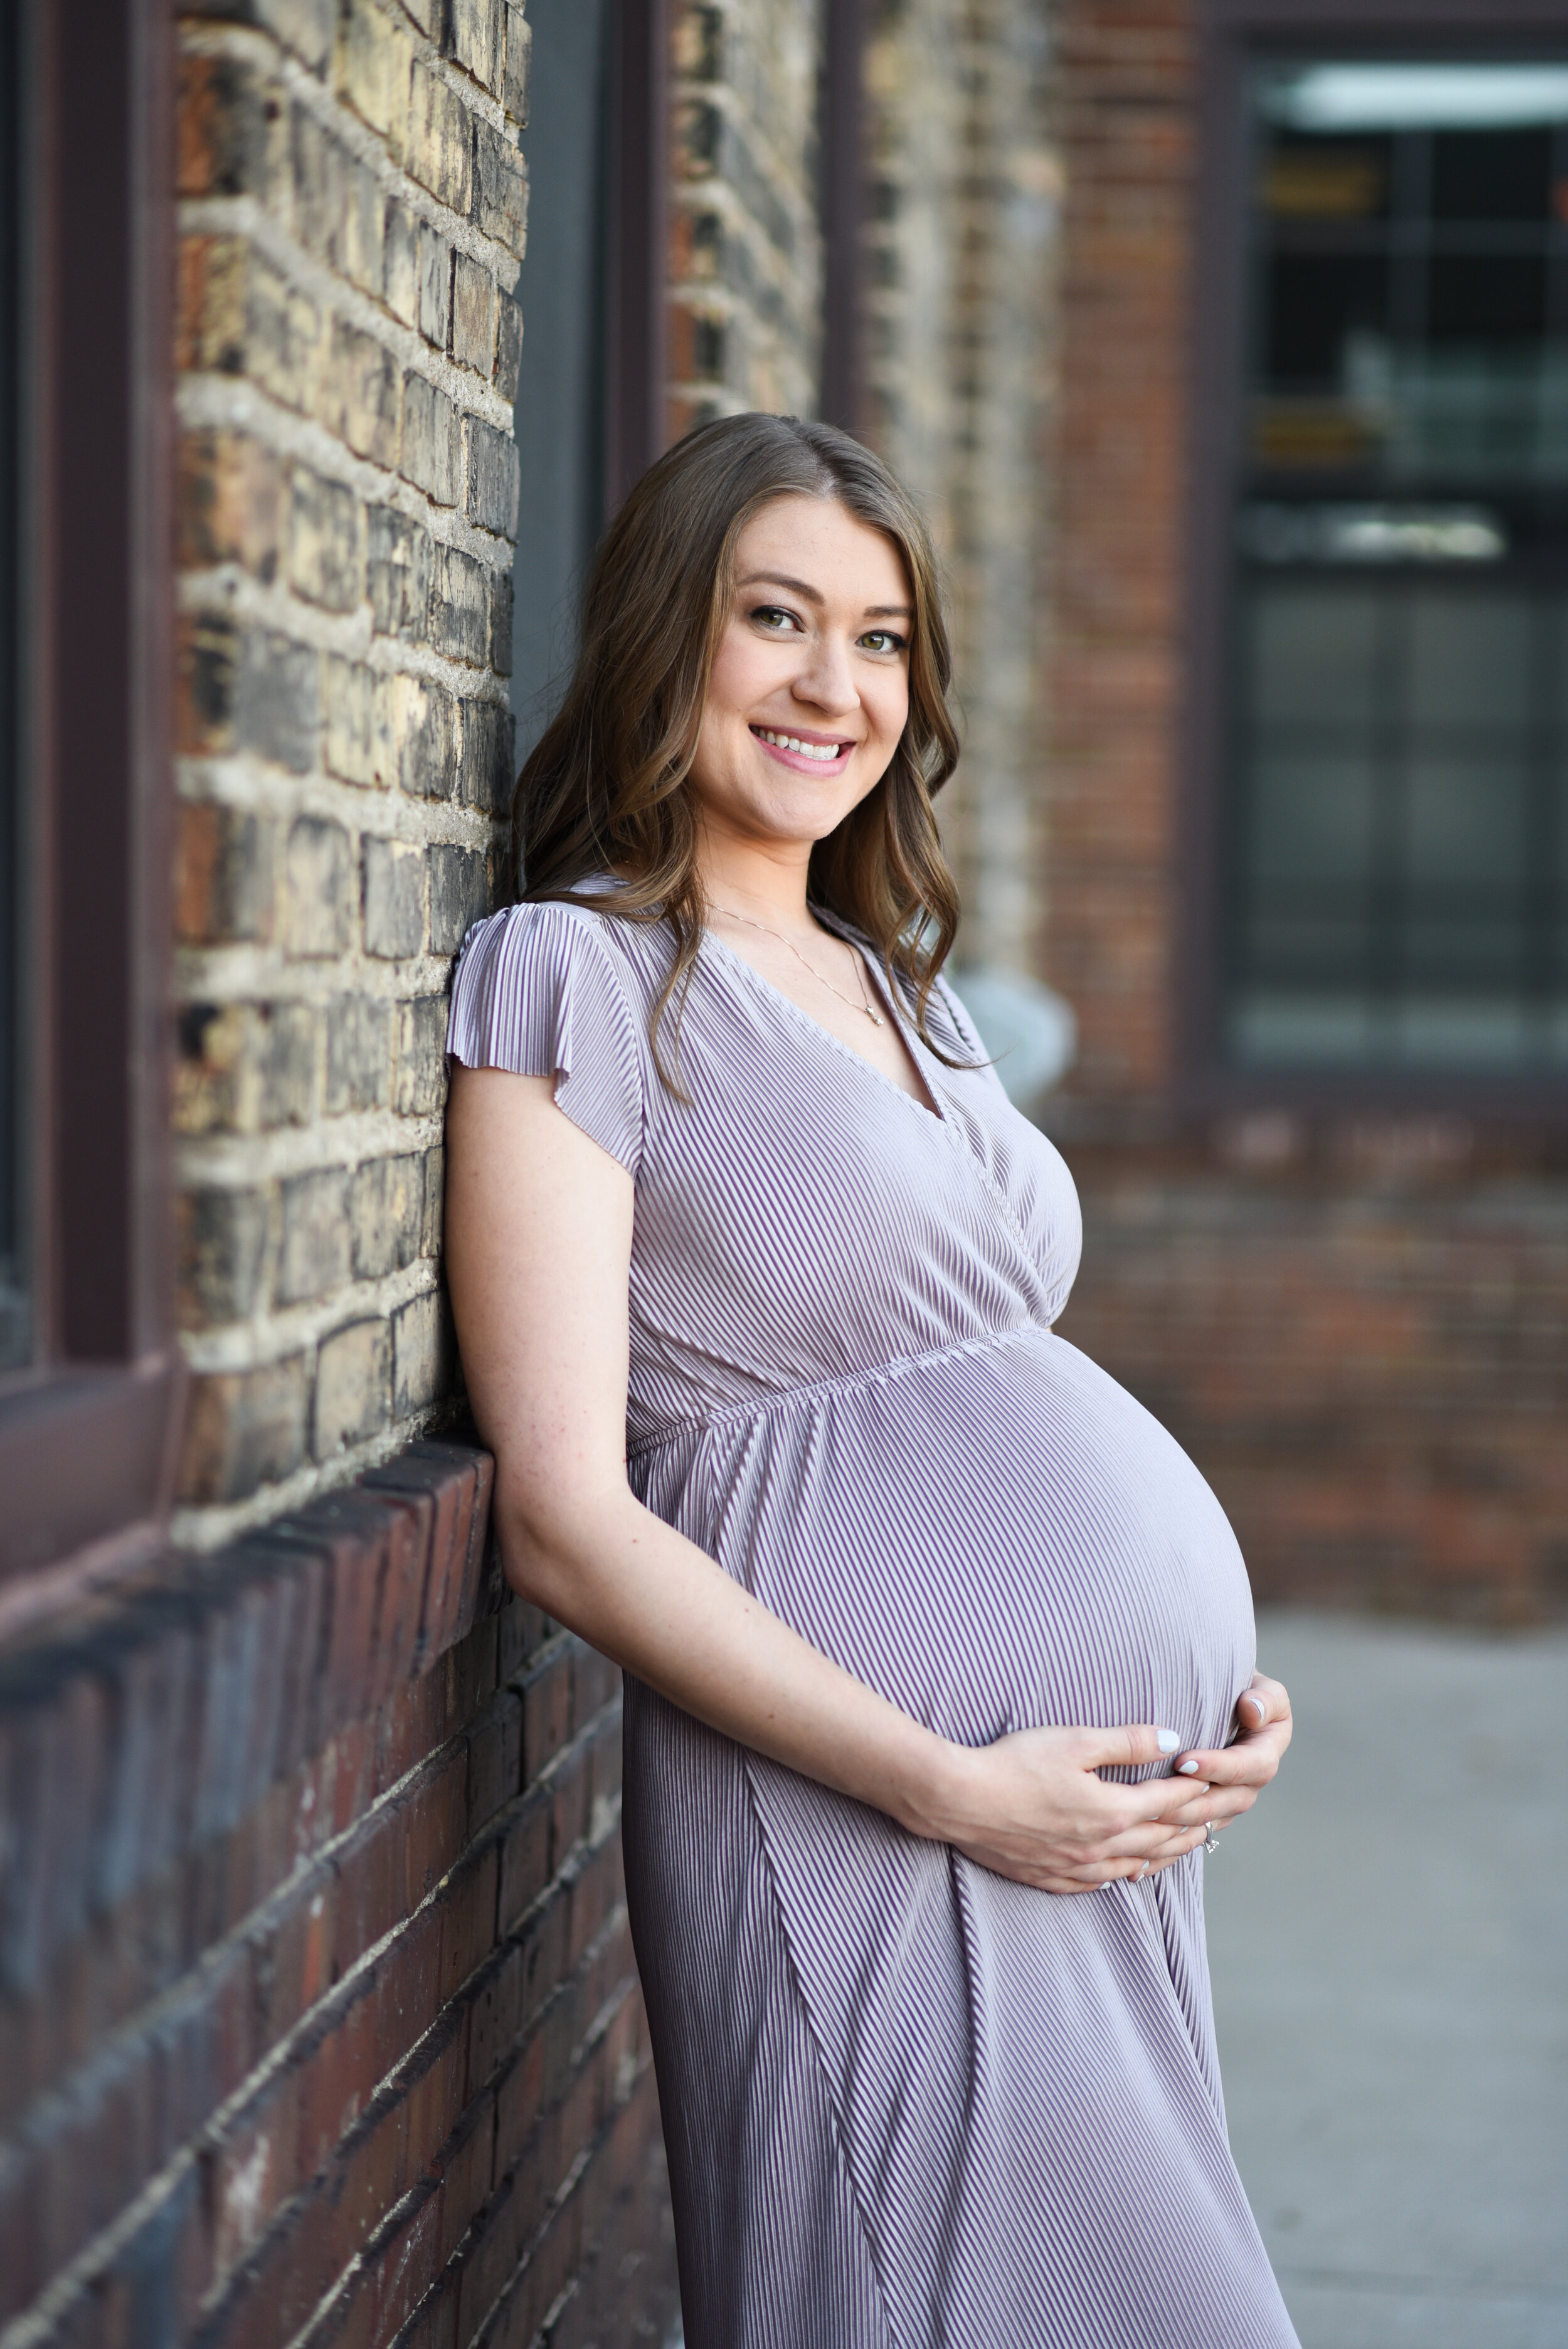 181_Sarah and Jim Portman Maternity 2019.jpg